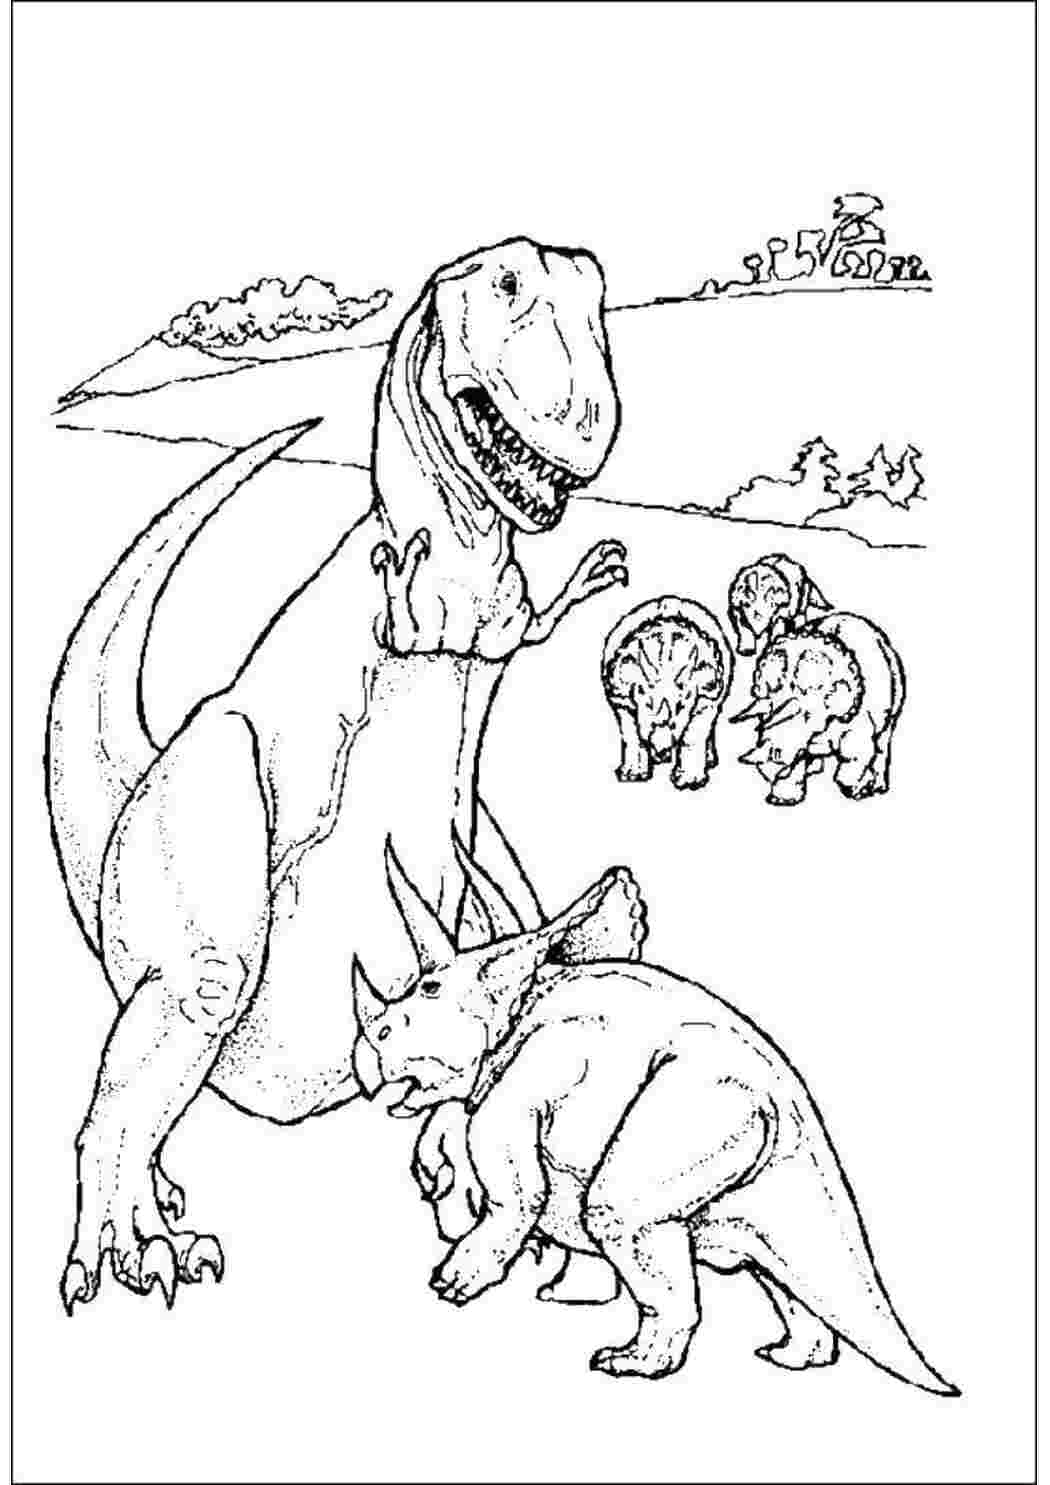 игра цвета динозавра